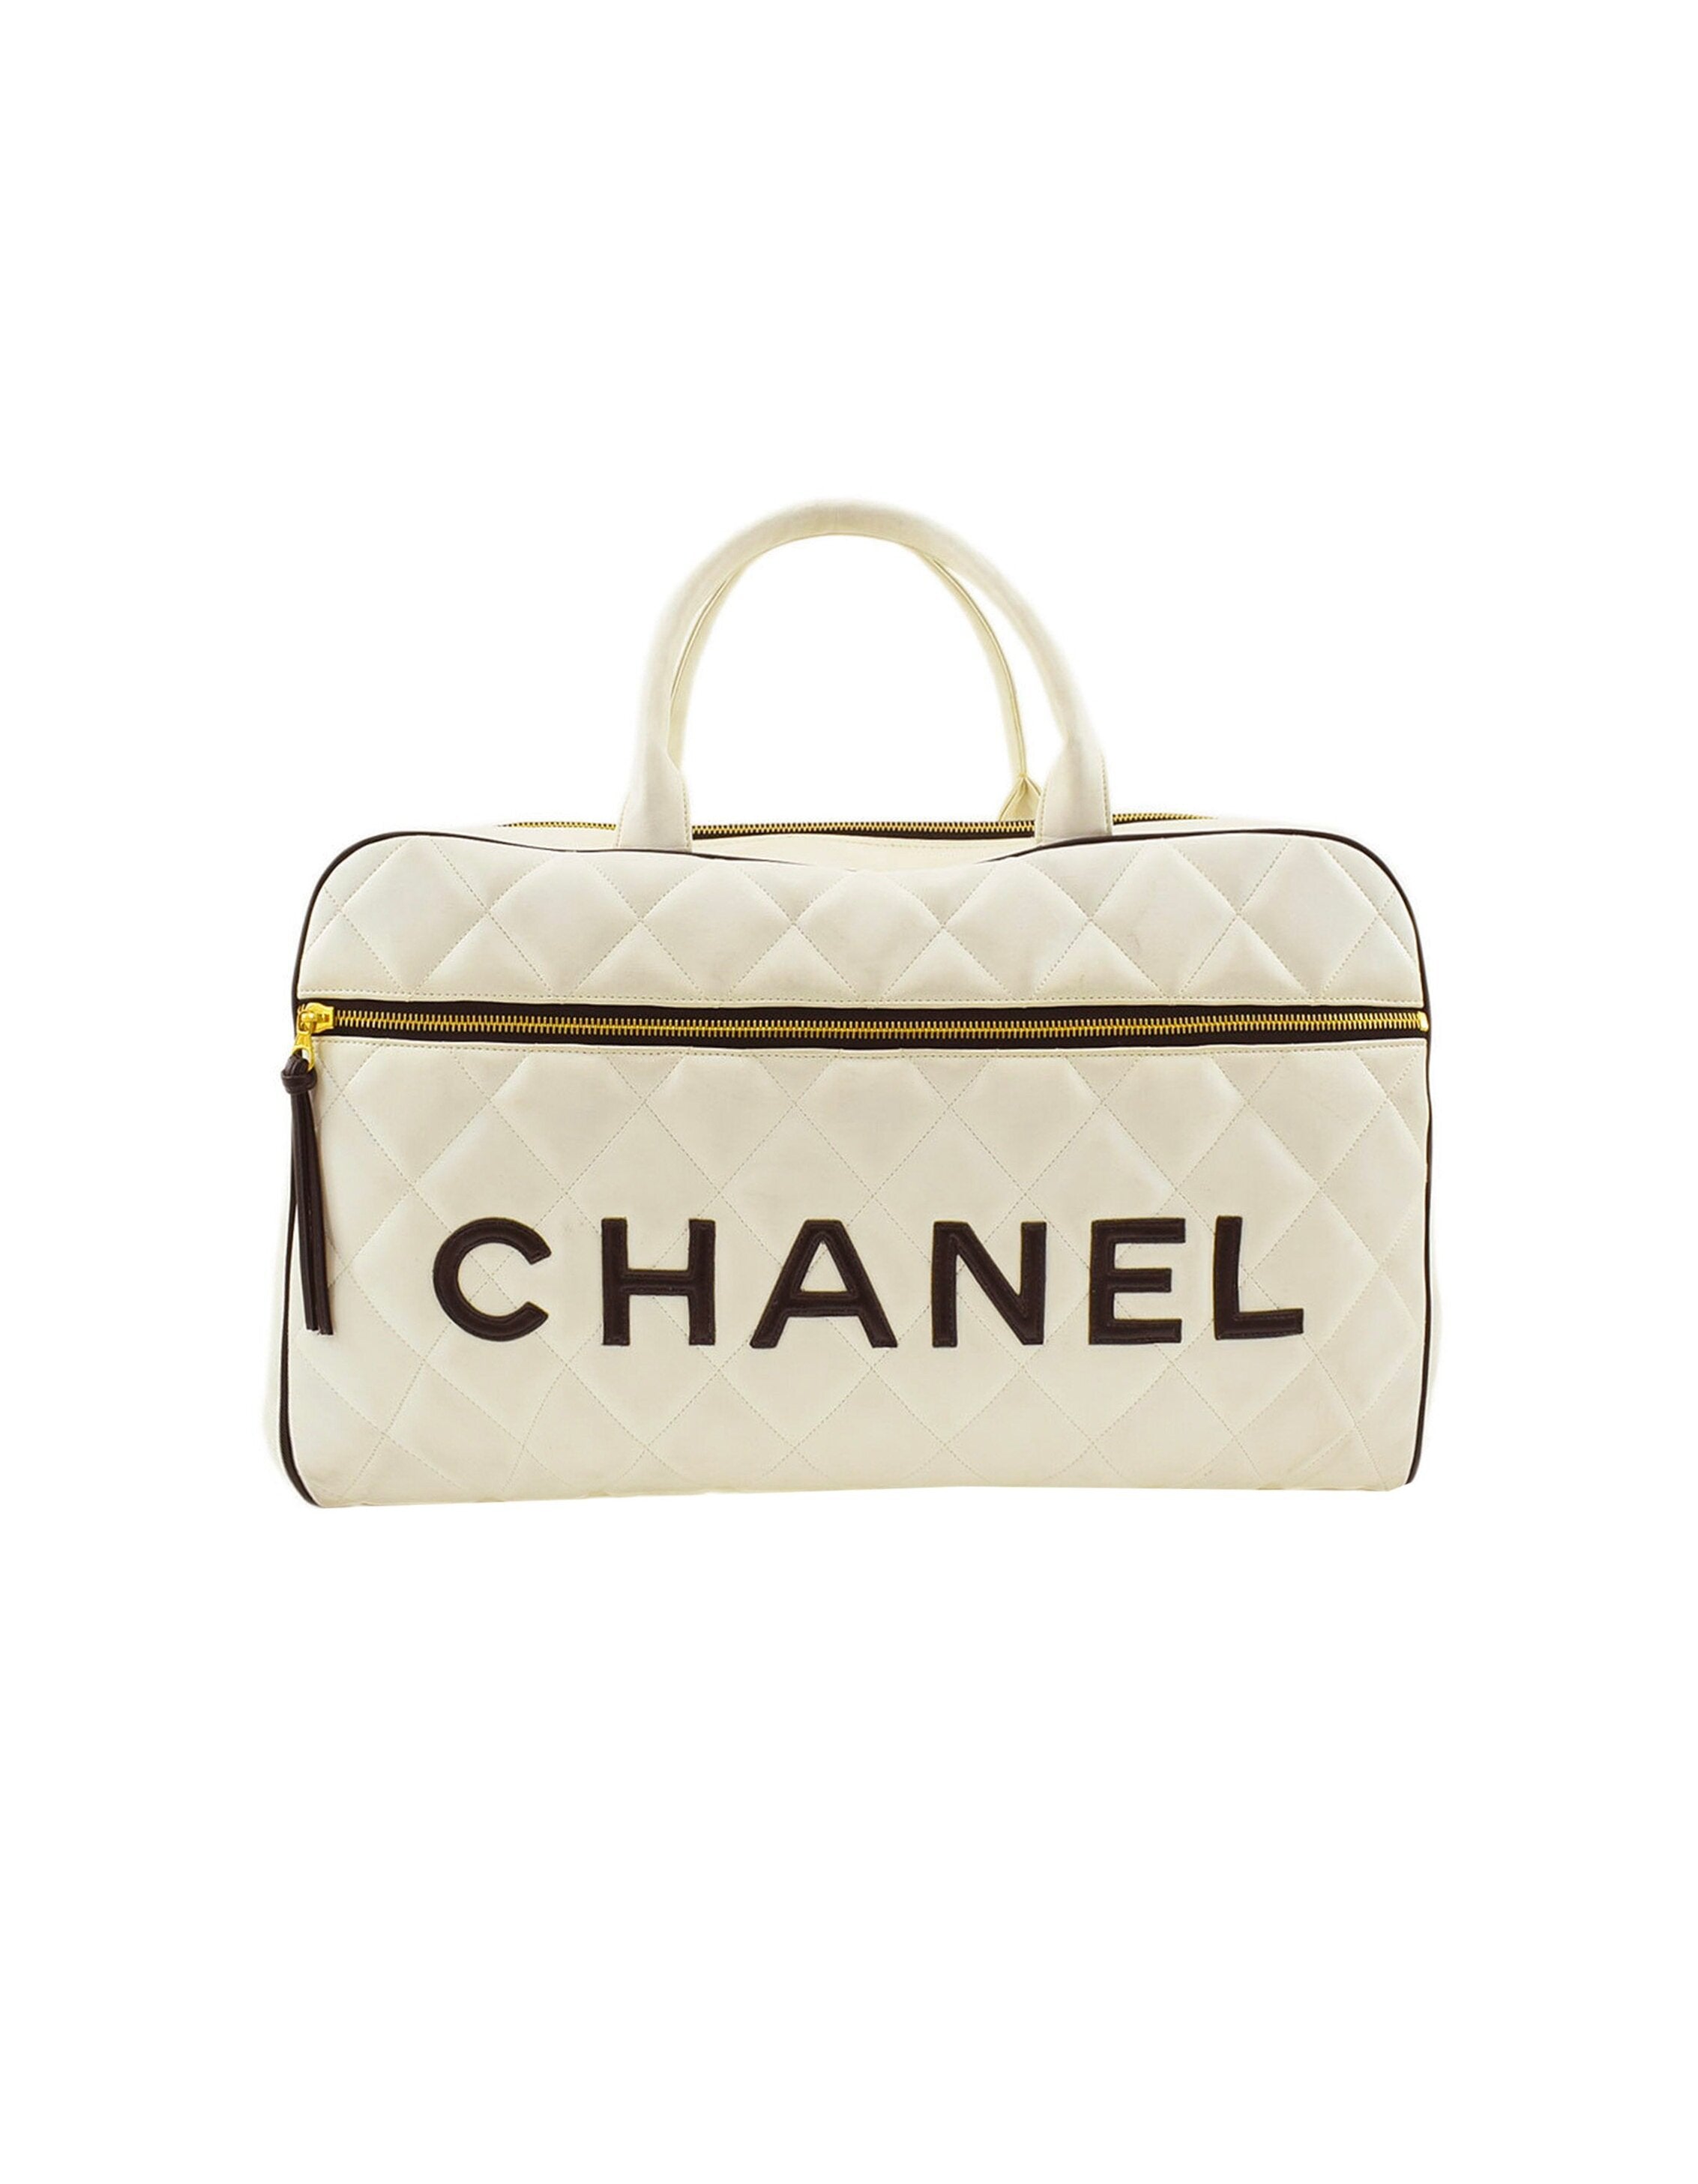 Chanel 2000s Rare XL Duffle Weekender Bag